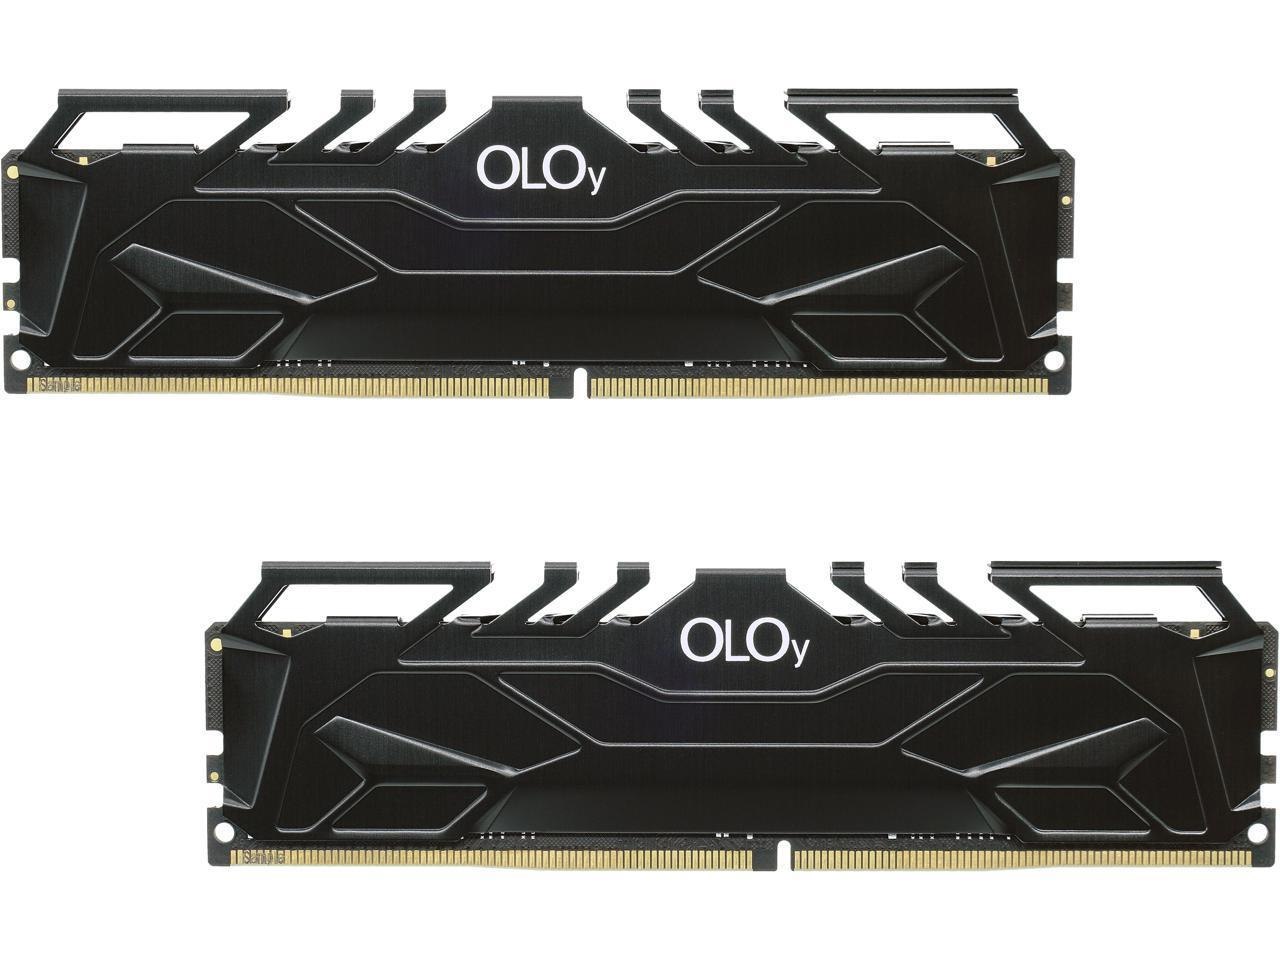 OLOy Owl 32GB (2 X 16GB) 288-Pin PC Ram DDR4 3600 (PC4 28800) Desktop Memory Model Md4u1636181chkda